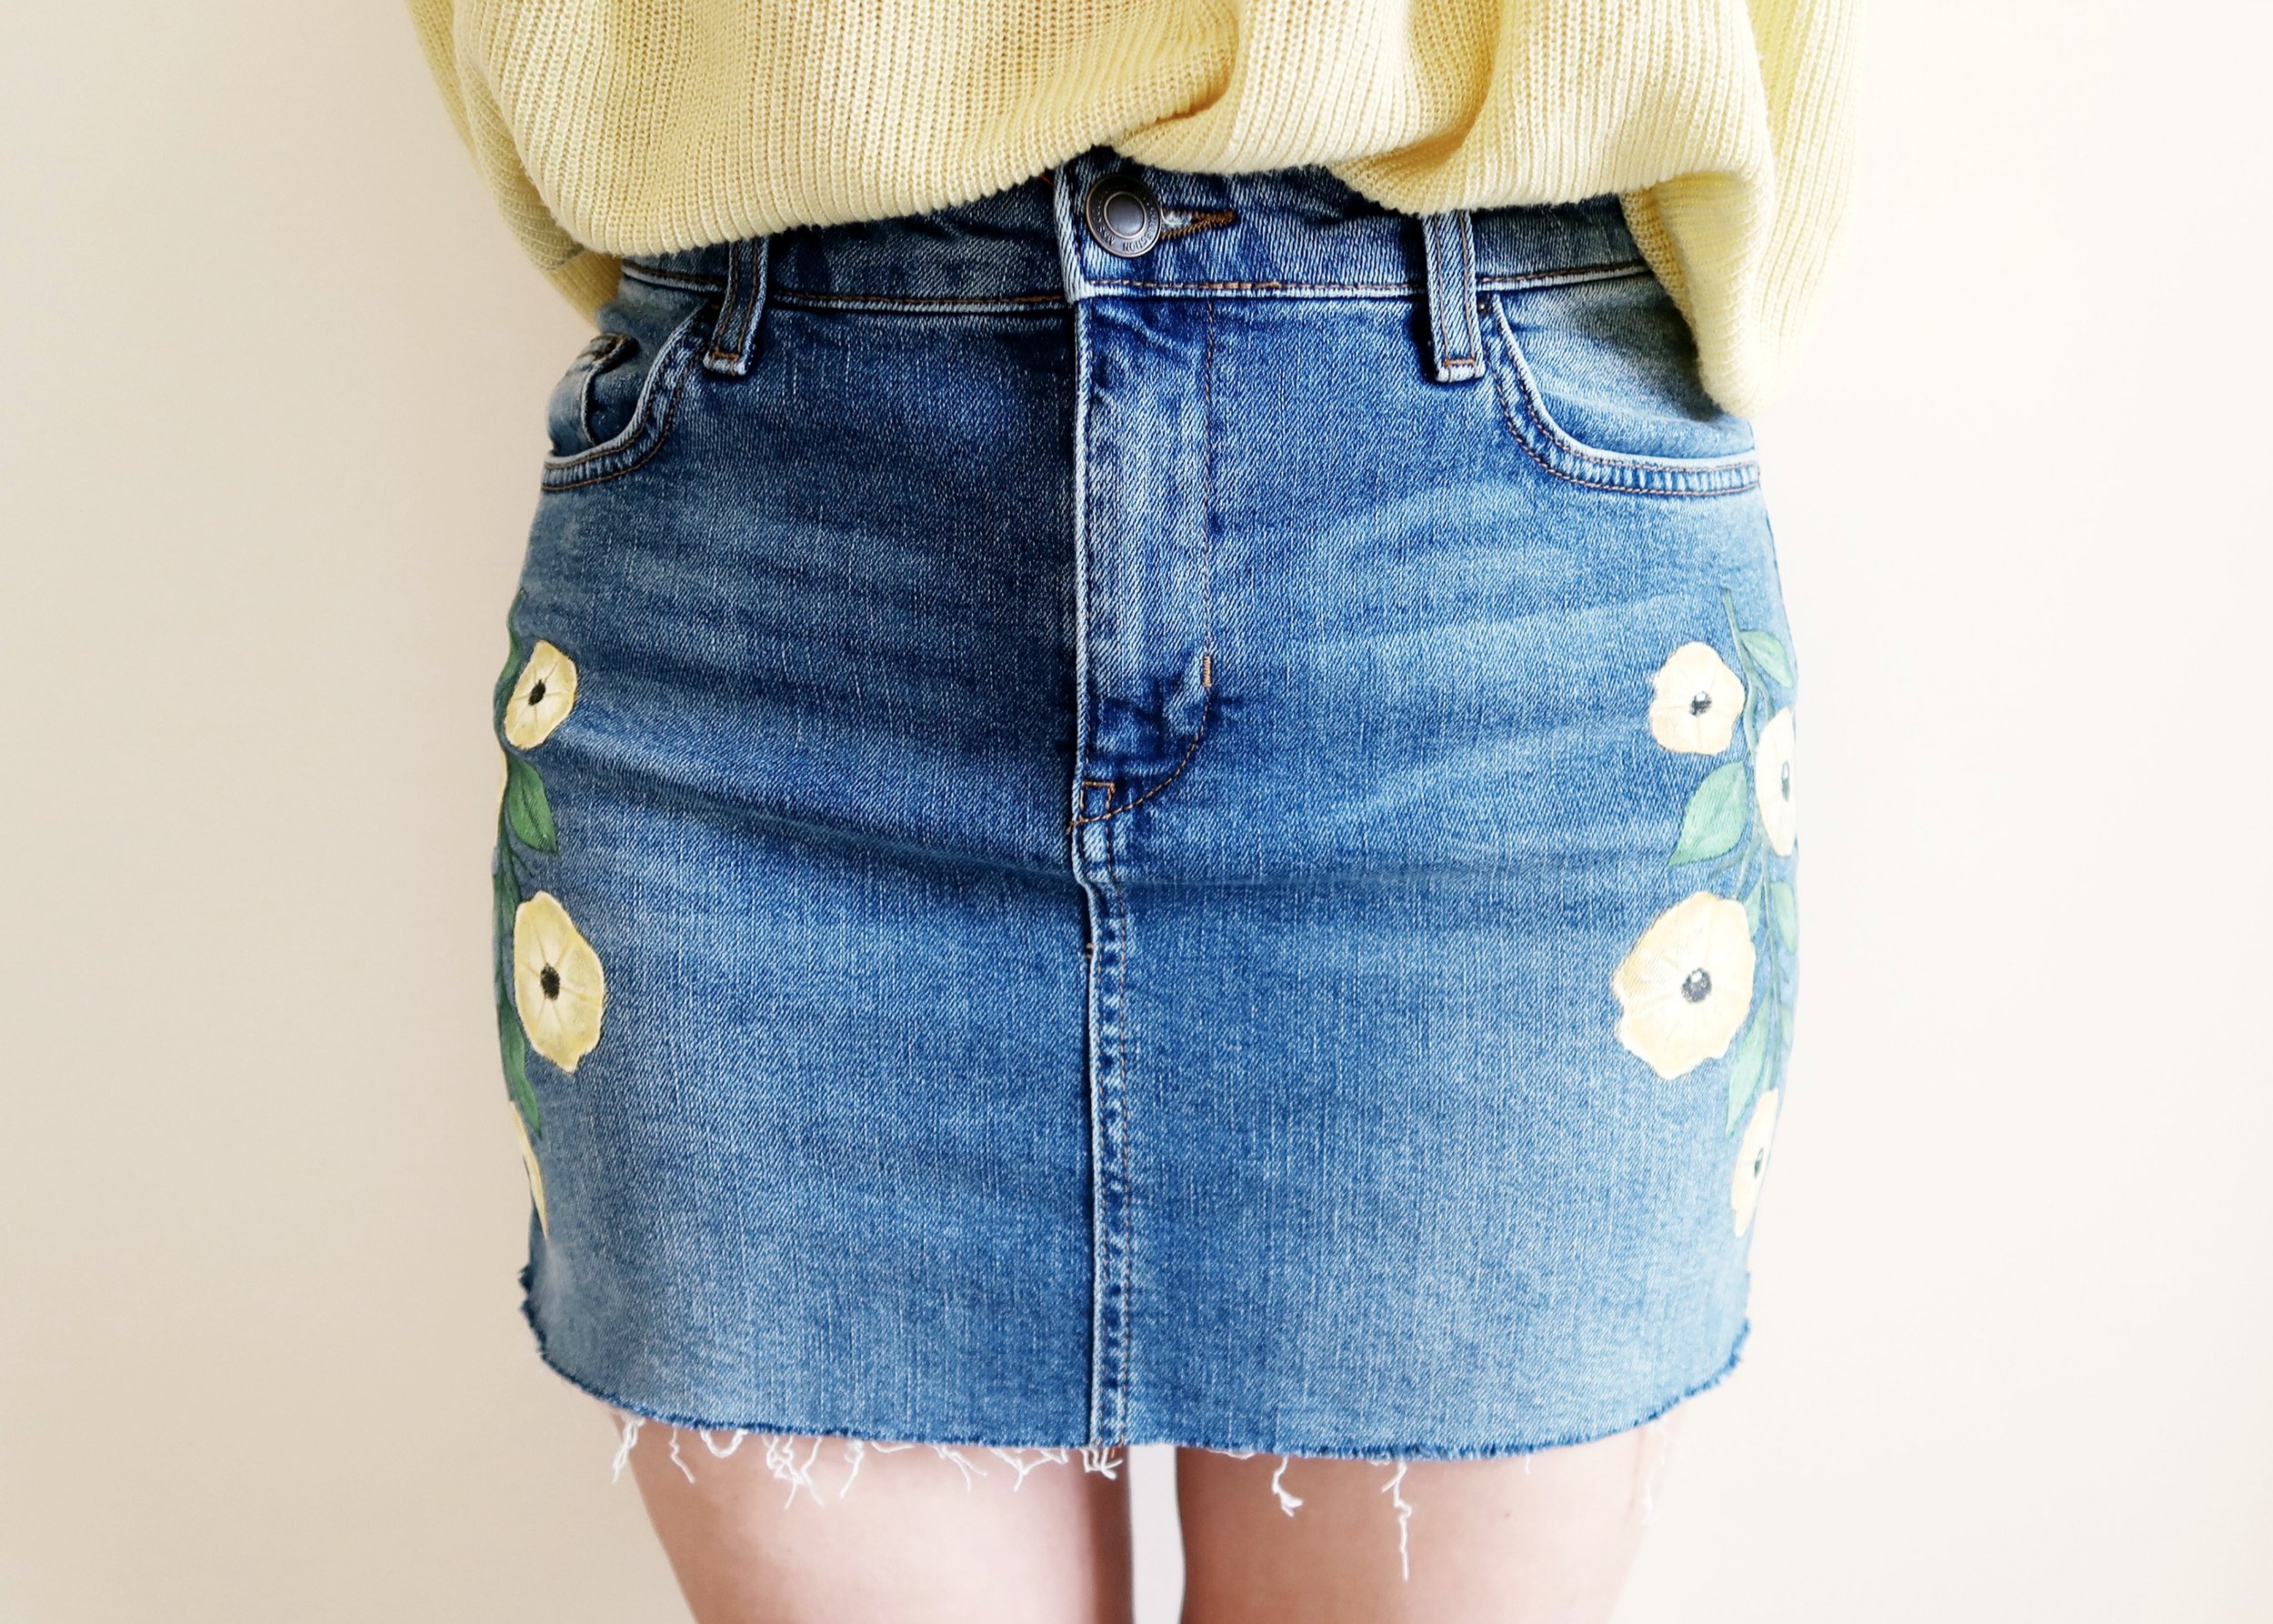 Fashionable Denim Skirts.jpeg